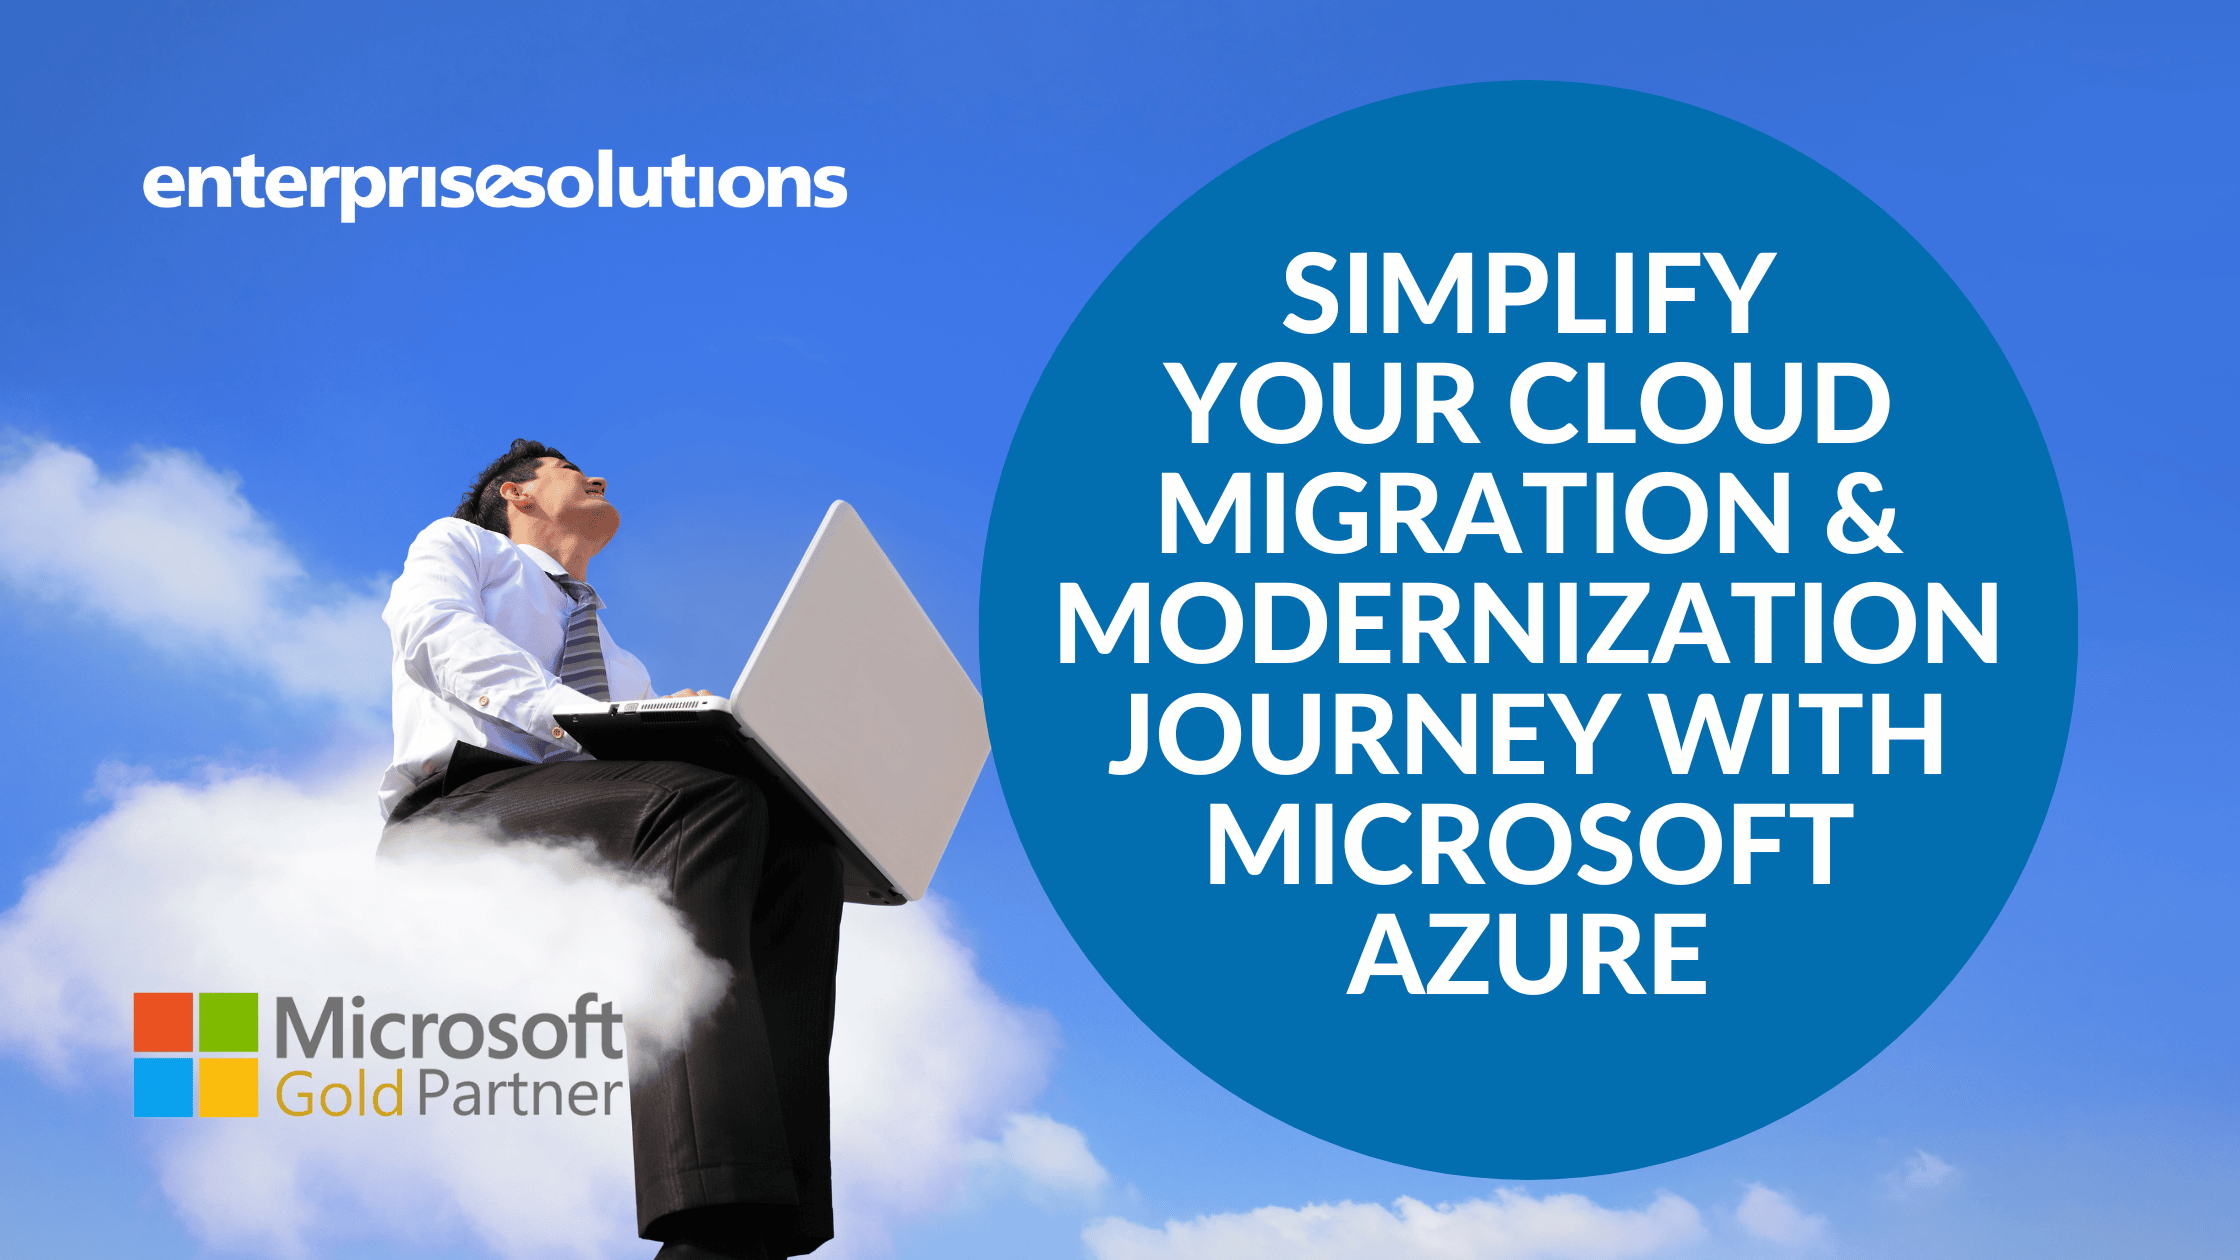 Simplify cloud migration and modernization journey with Microsoft Azure